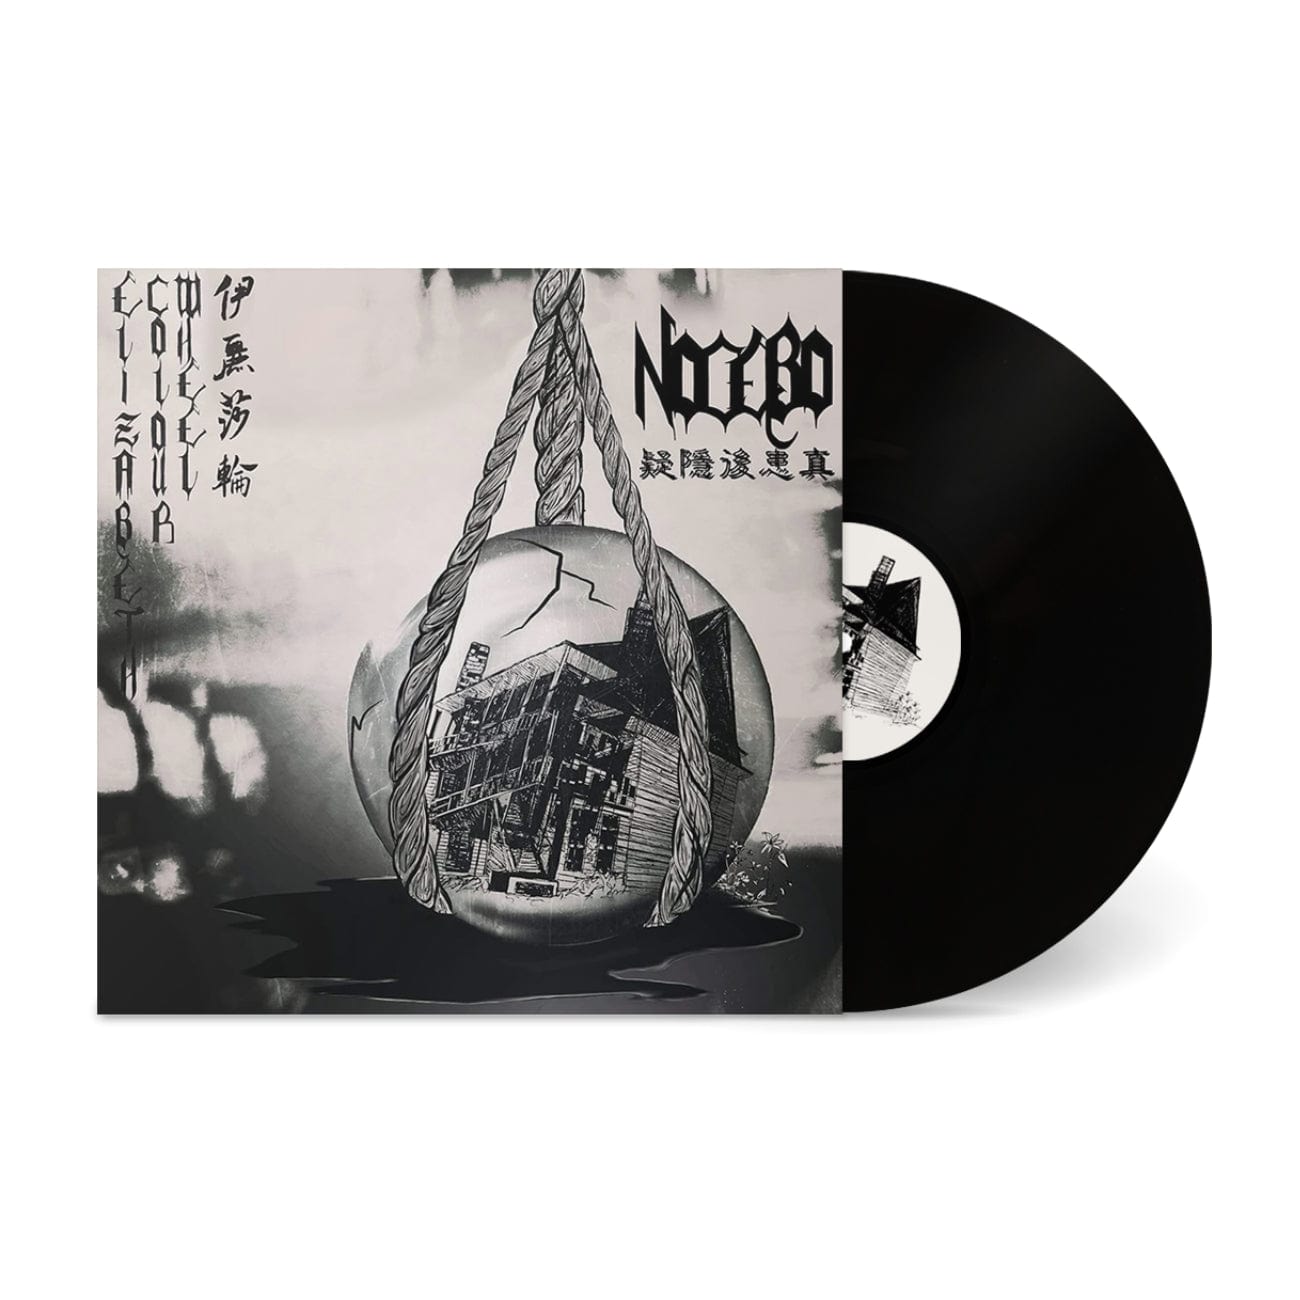 The Flenser Vinyl Elizabeth Colour Wheel "Nocebo" LP